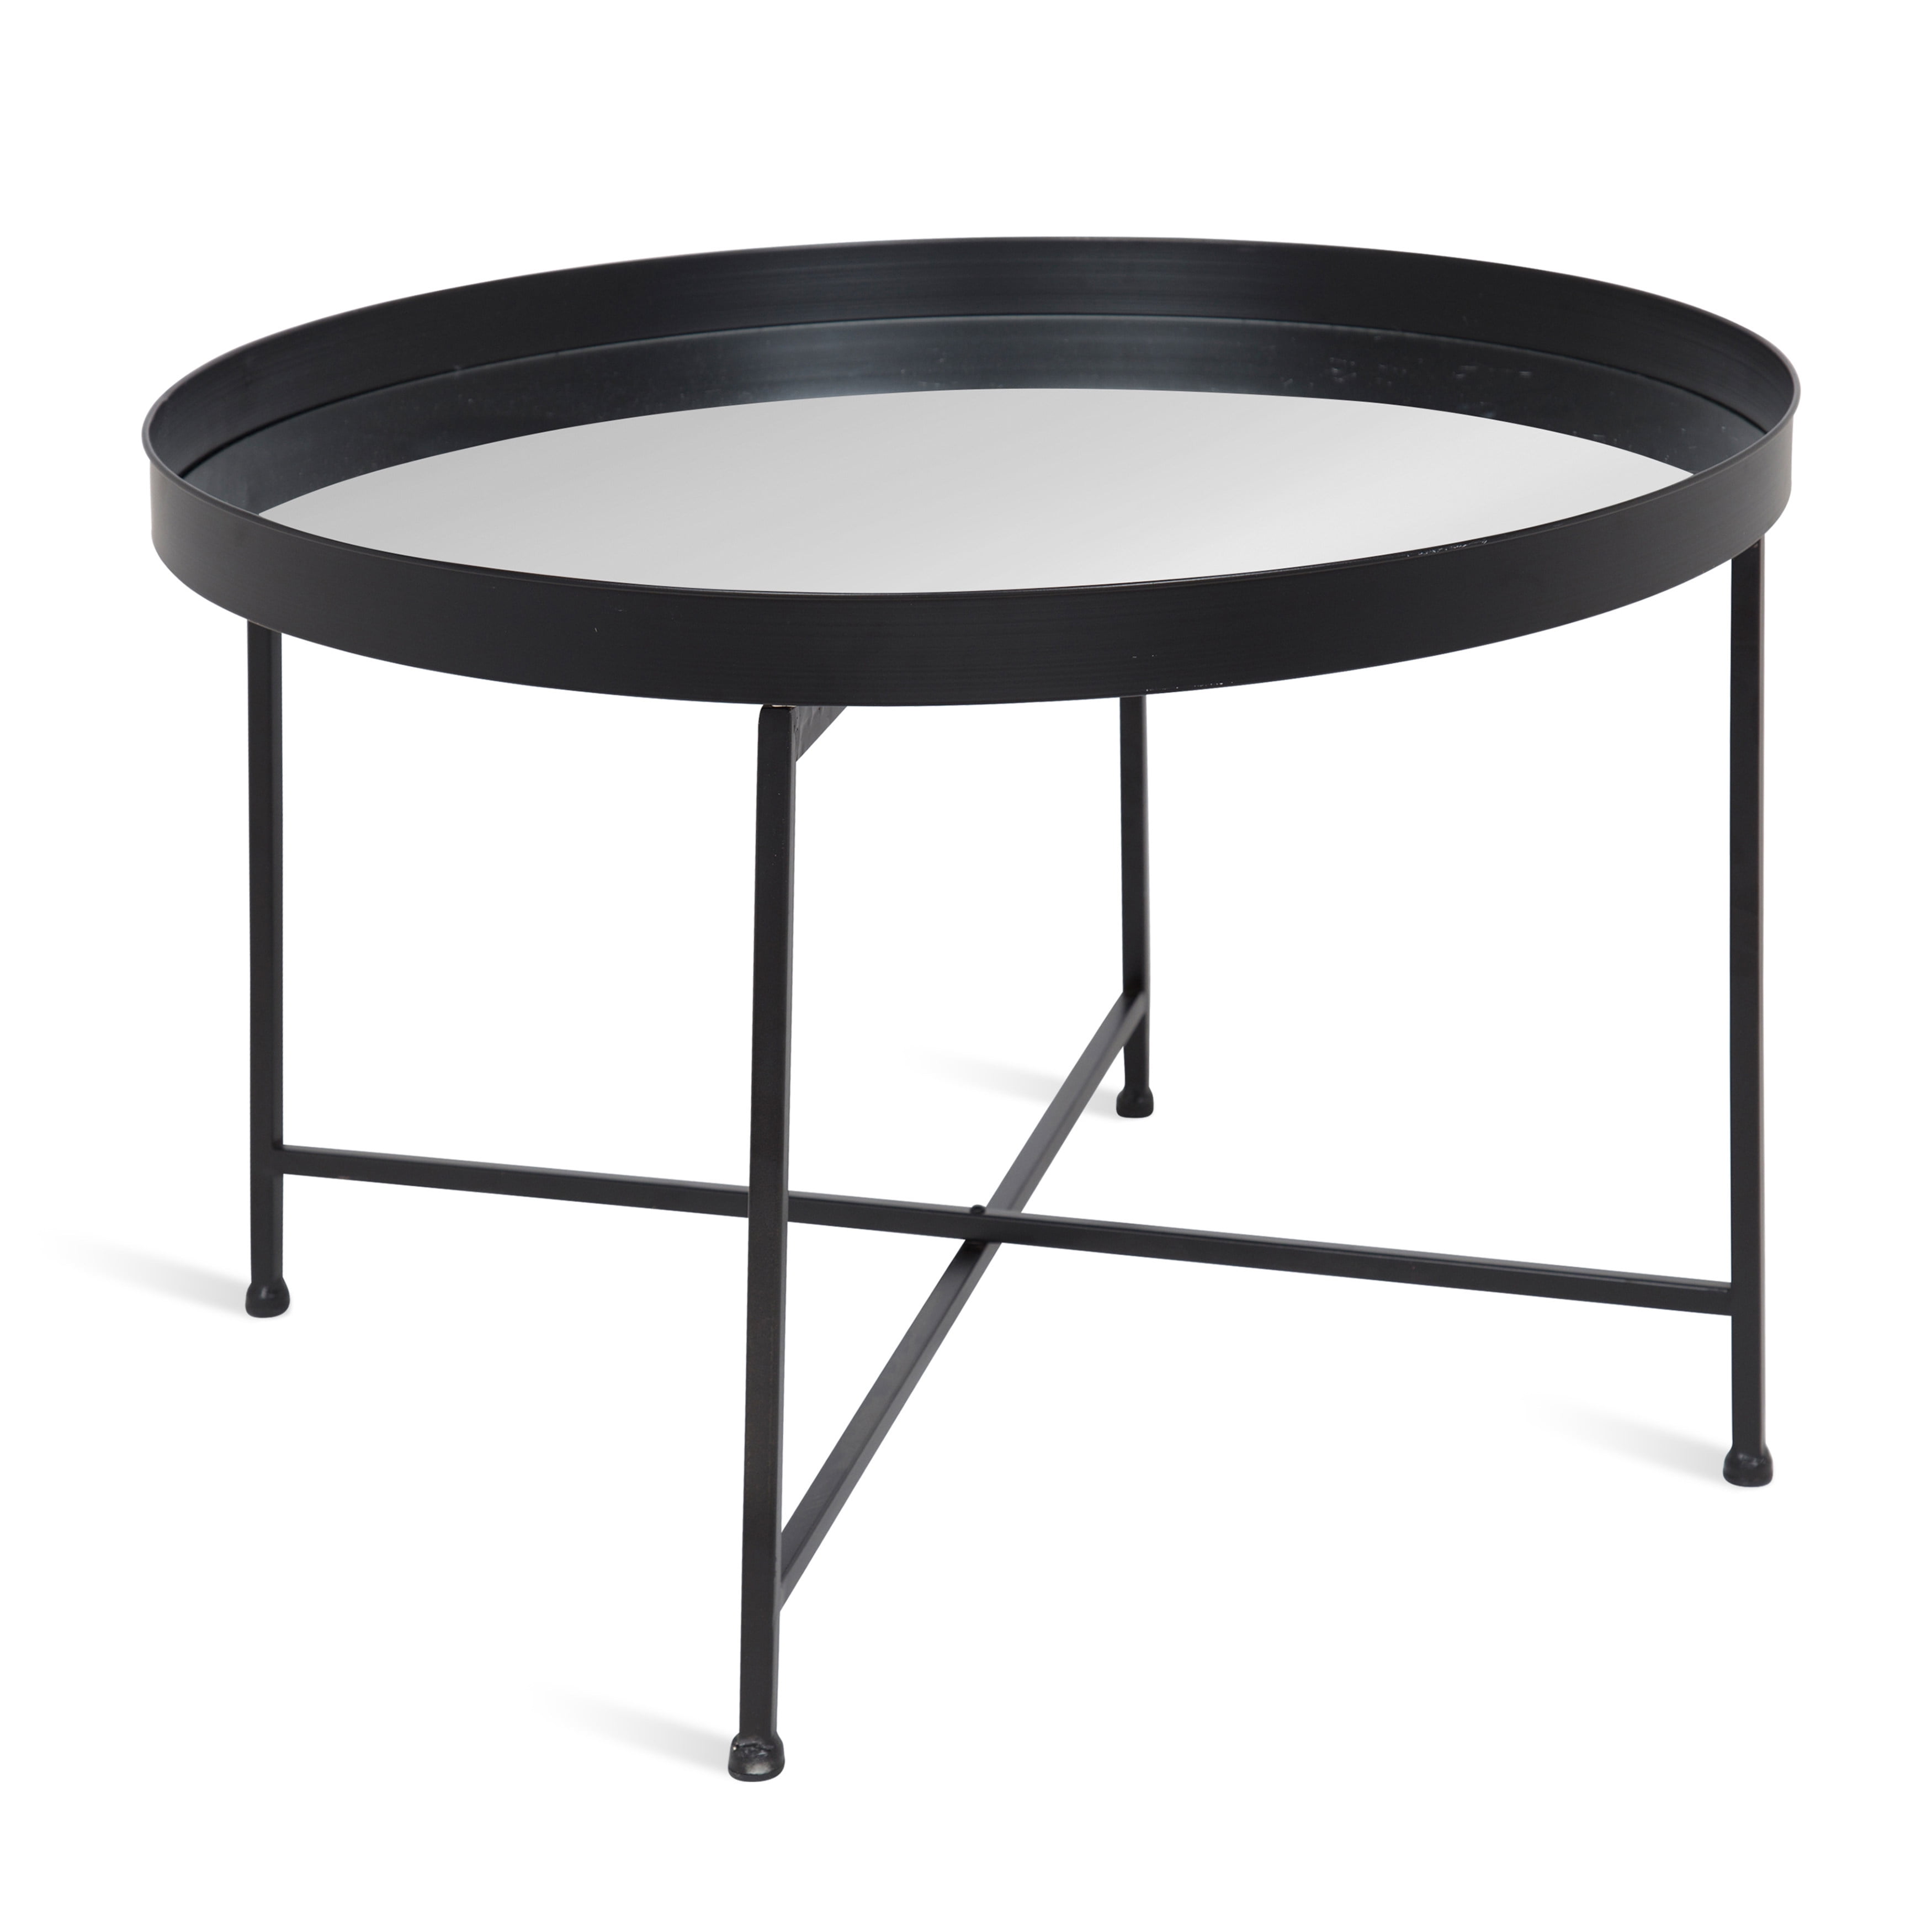 Celia Round Metal Foldable Coffee Table, Big Round Coffee Table Tray